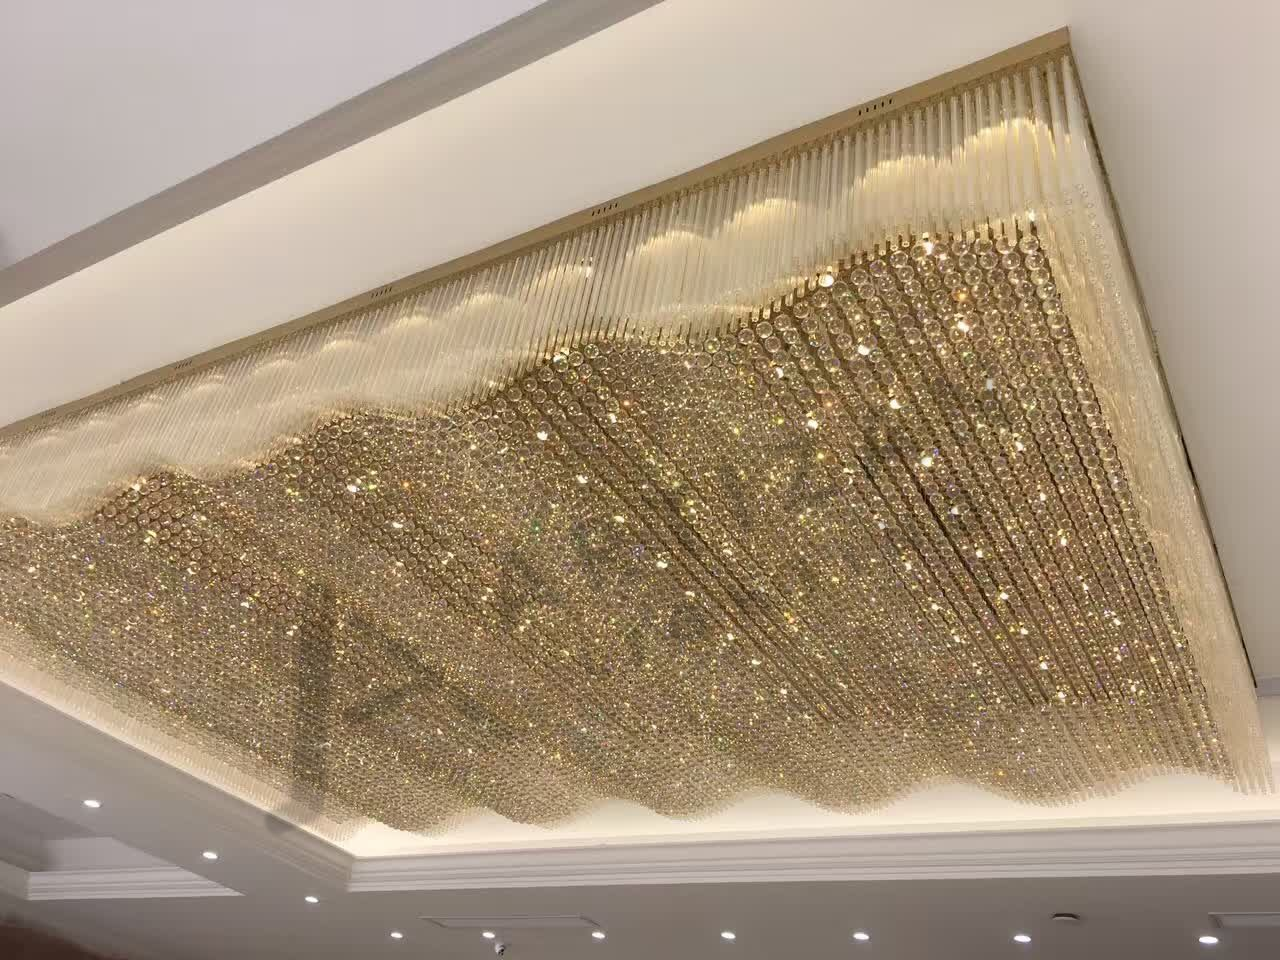 Hotel crystal chandeliers classic design For ballroom indoor decorative